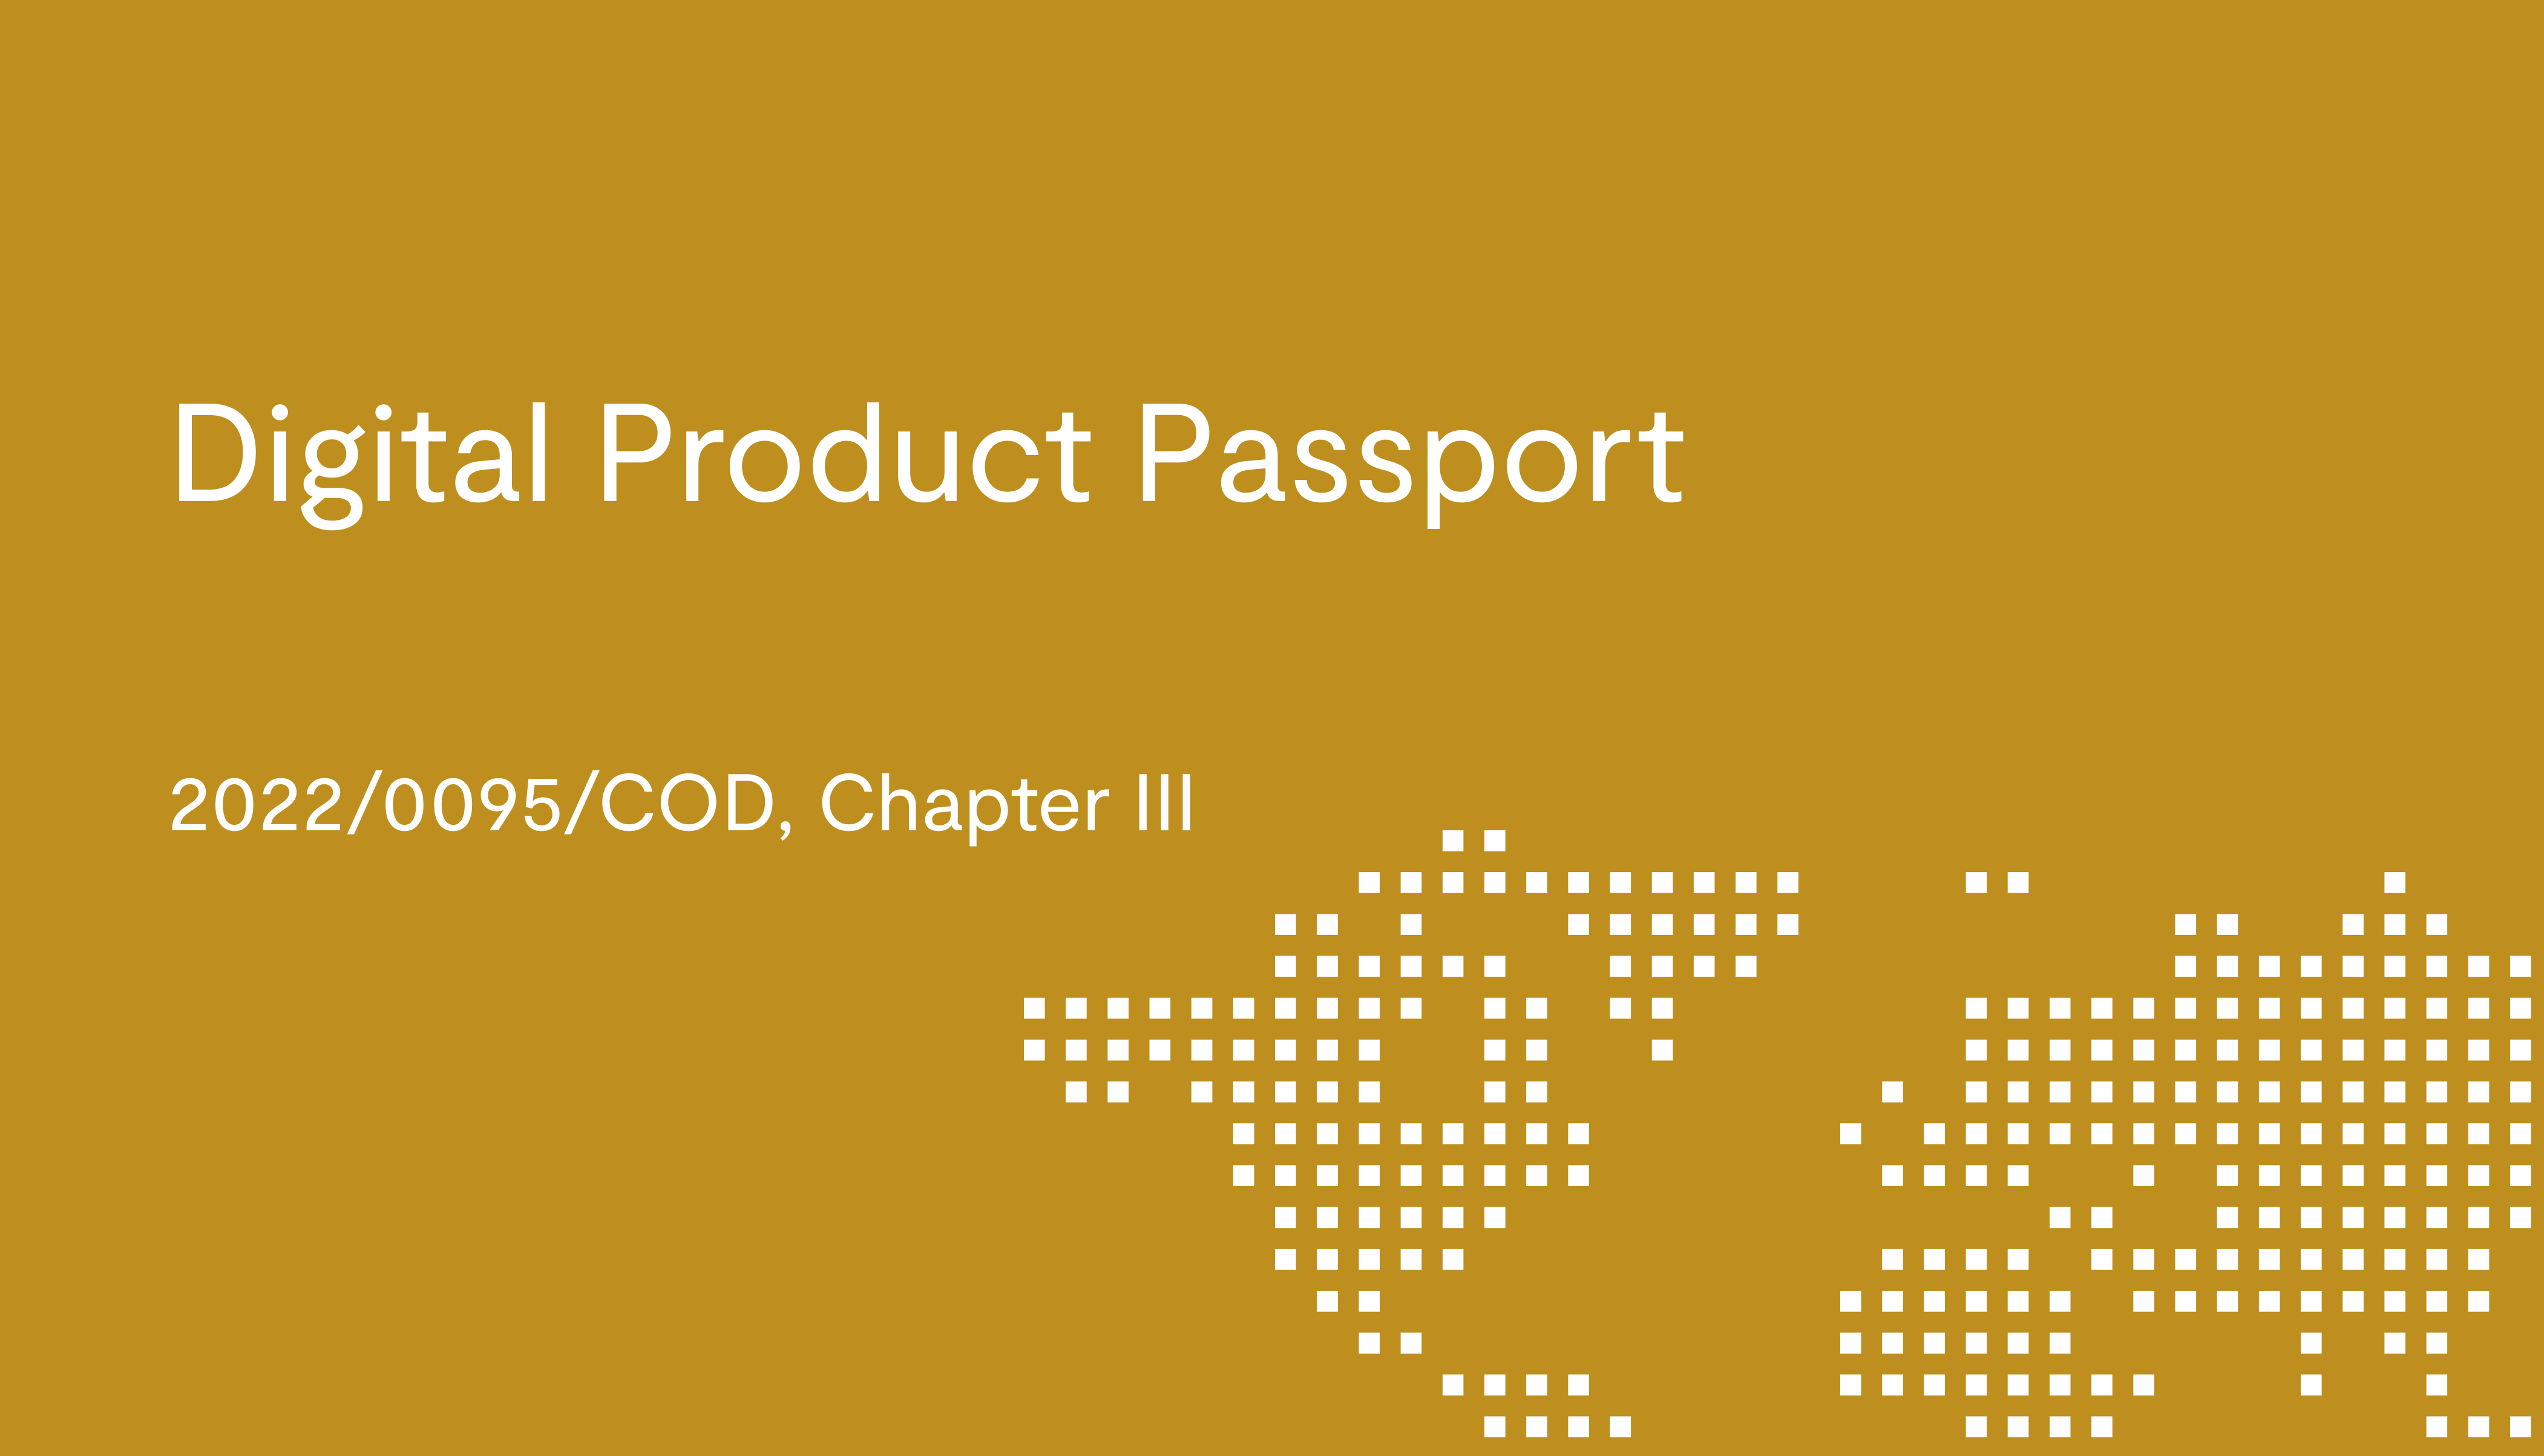 Digital Product Passport (2022/0095/COD, Chapter III)